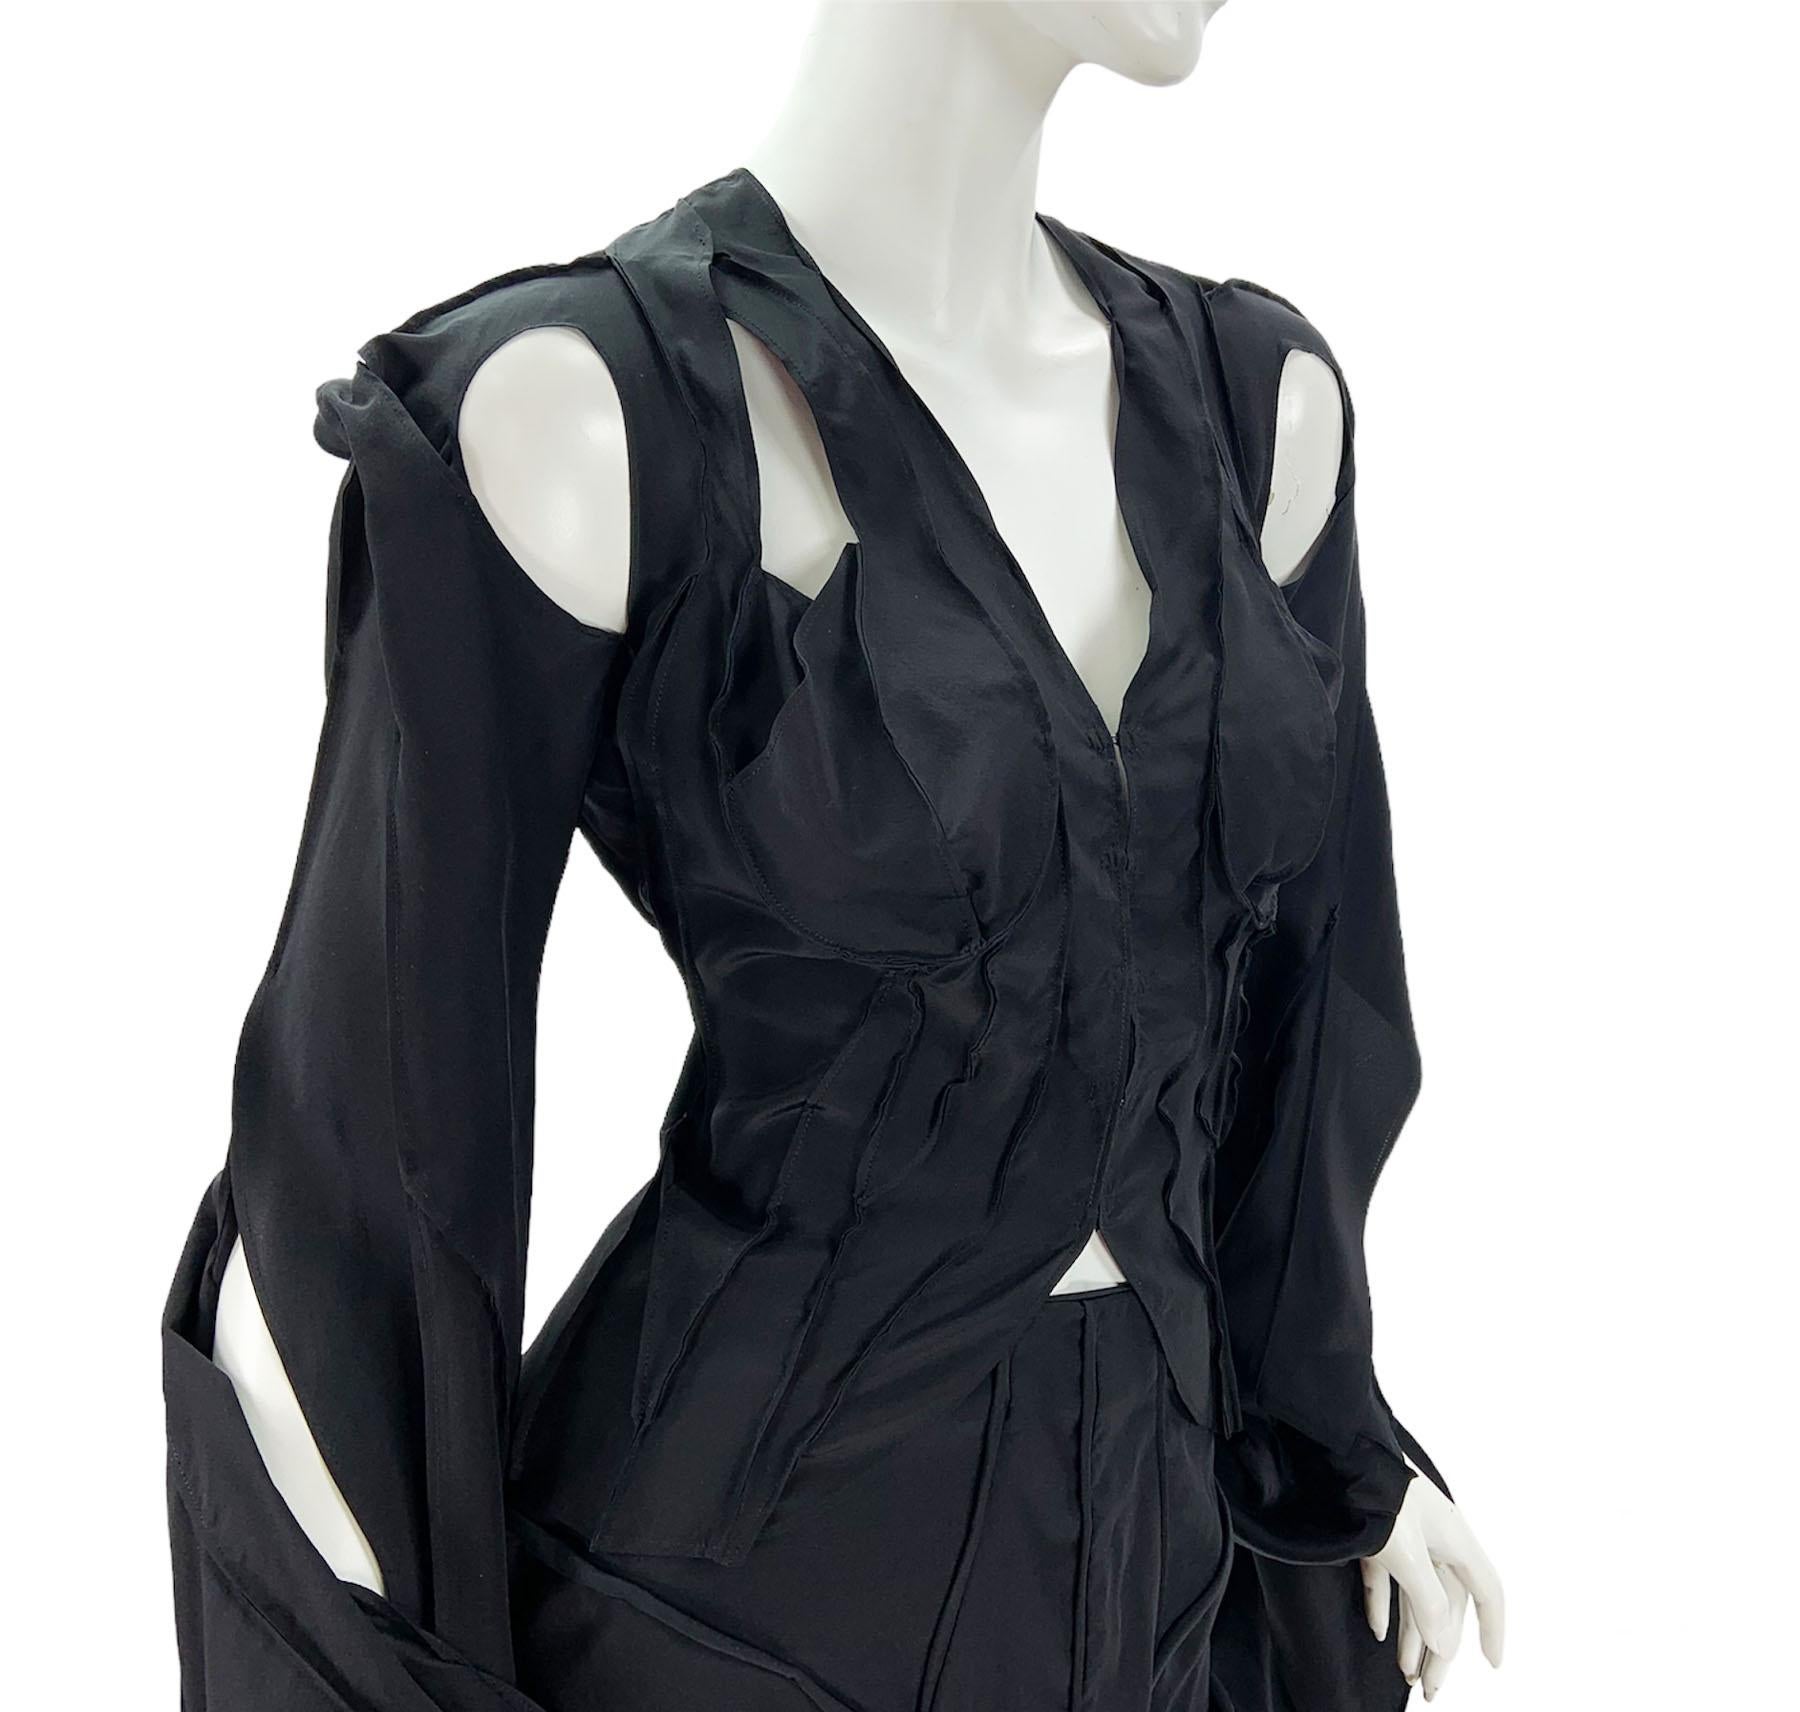 Tom Ford for Yves Saint Laurent S/S 2003 Silk Black Skirt Suit French 38 - US 6 For Sale 3